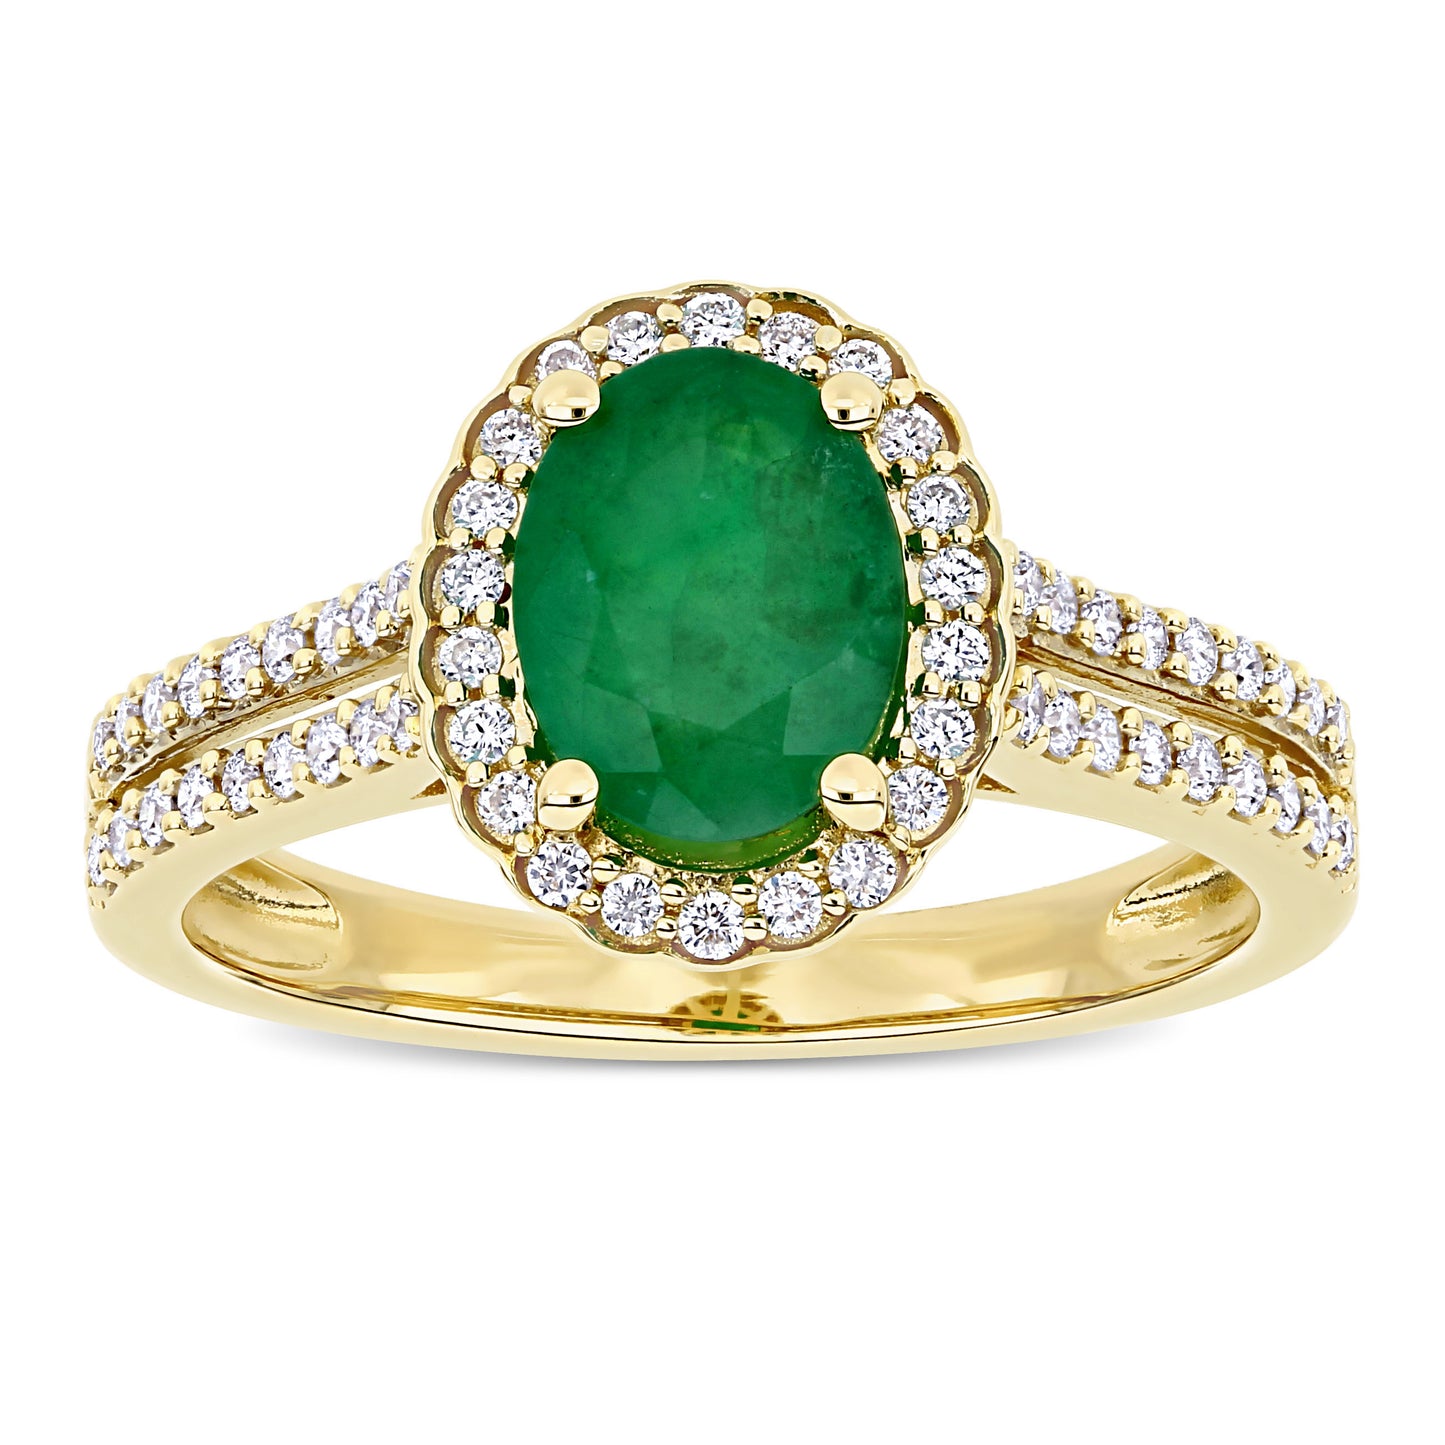 Oval Cut Emerald & Diamond Ring in 14k Yellow Gold